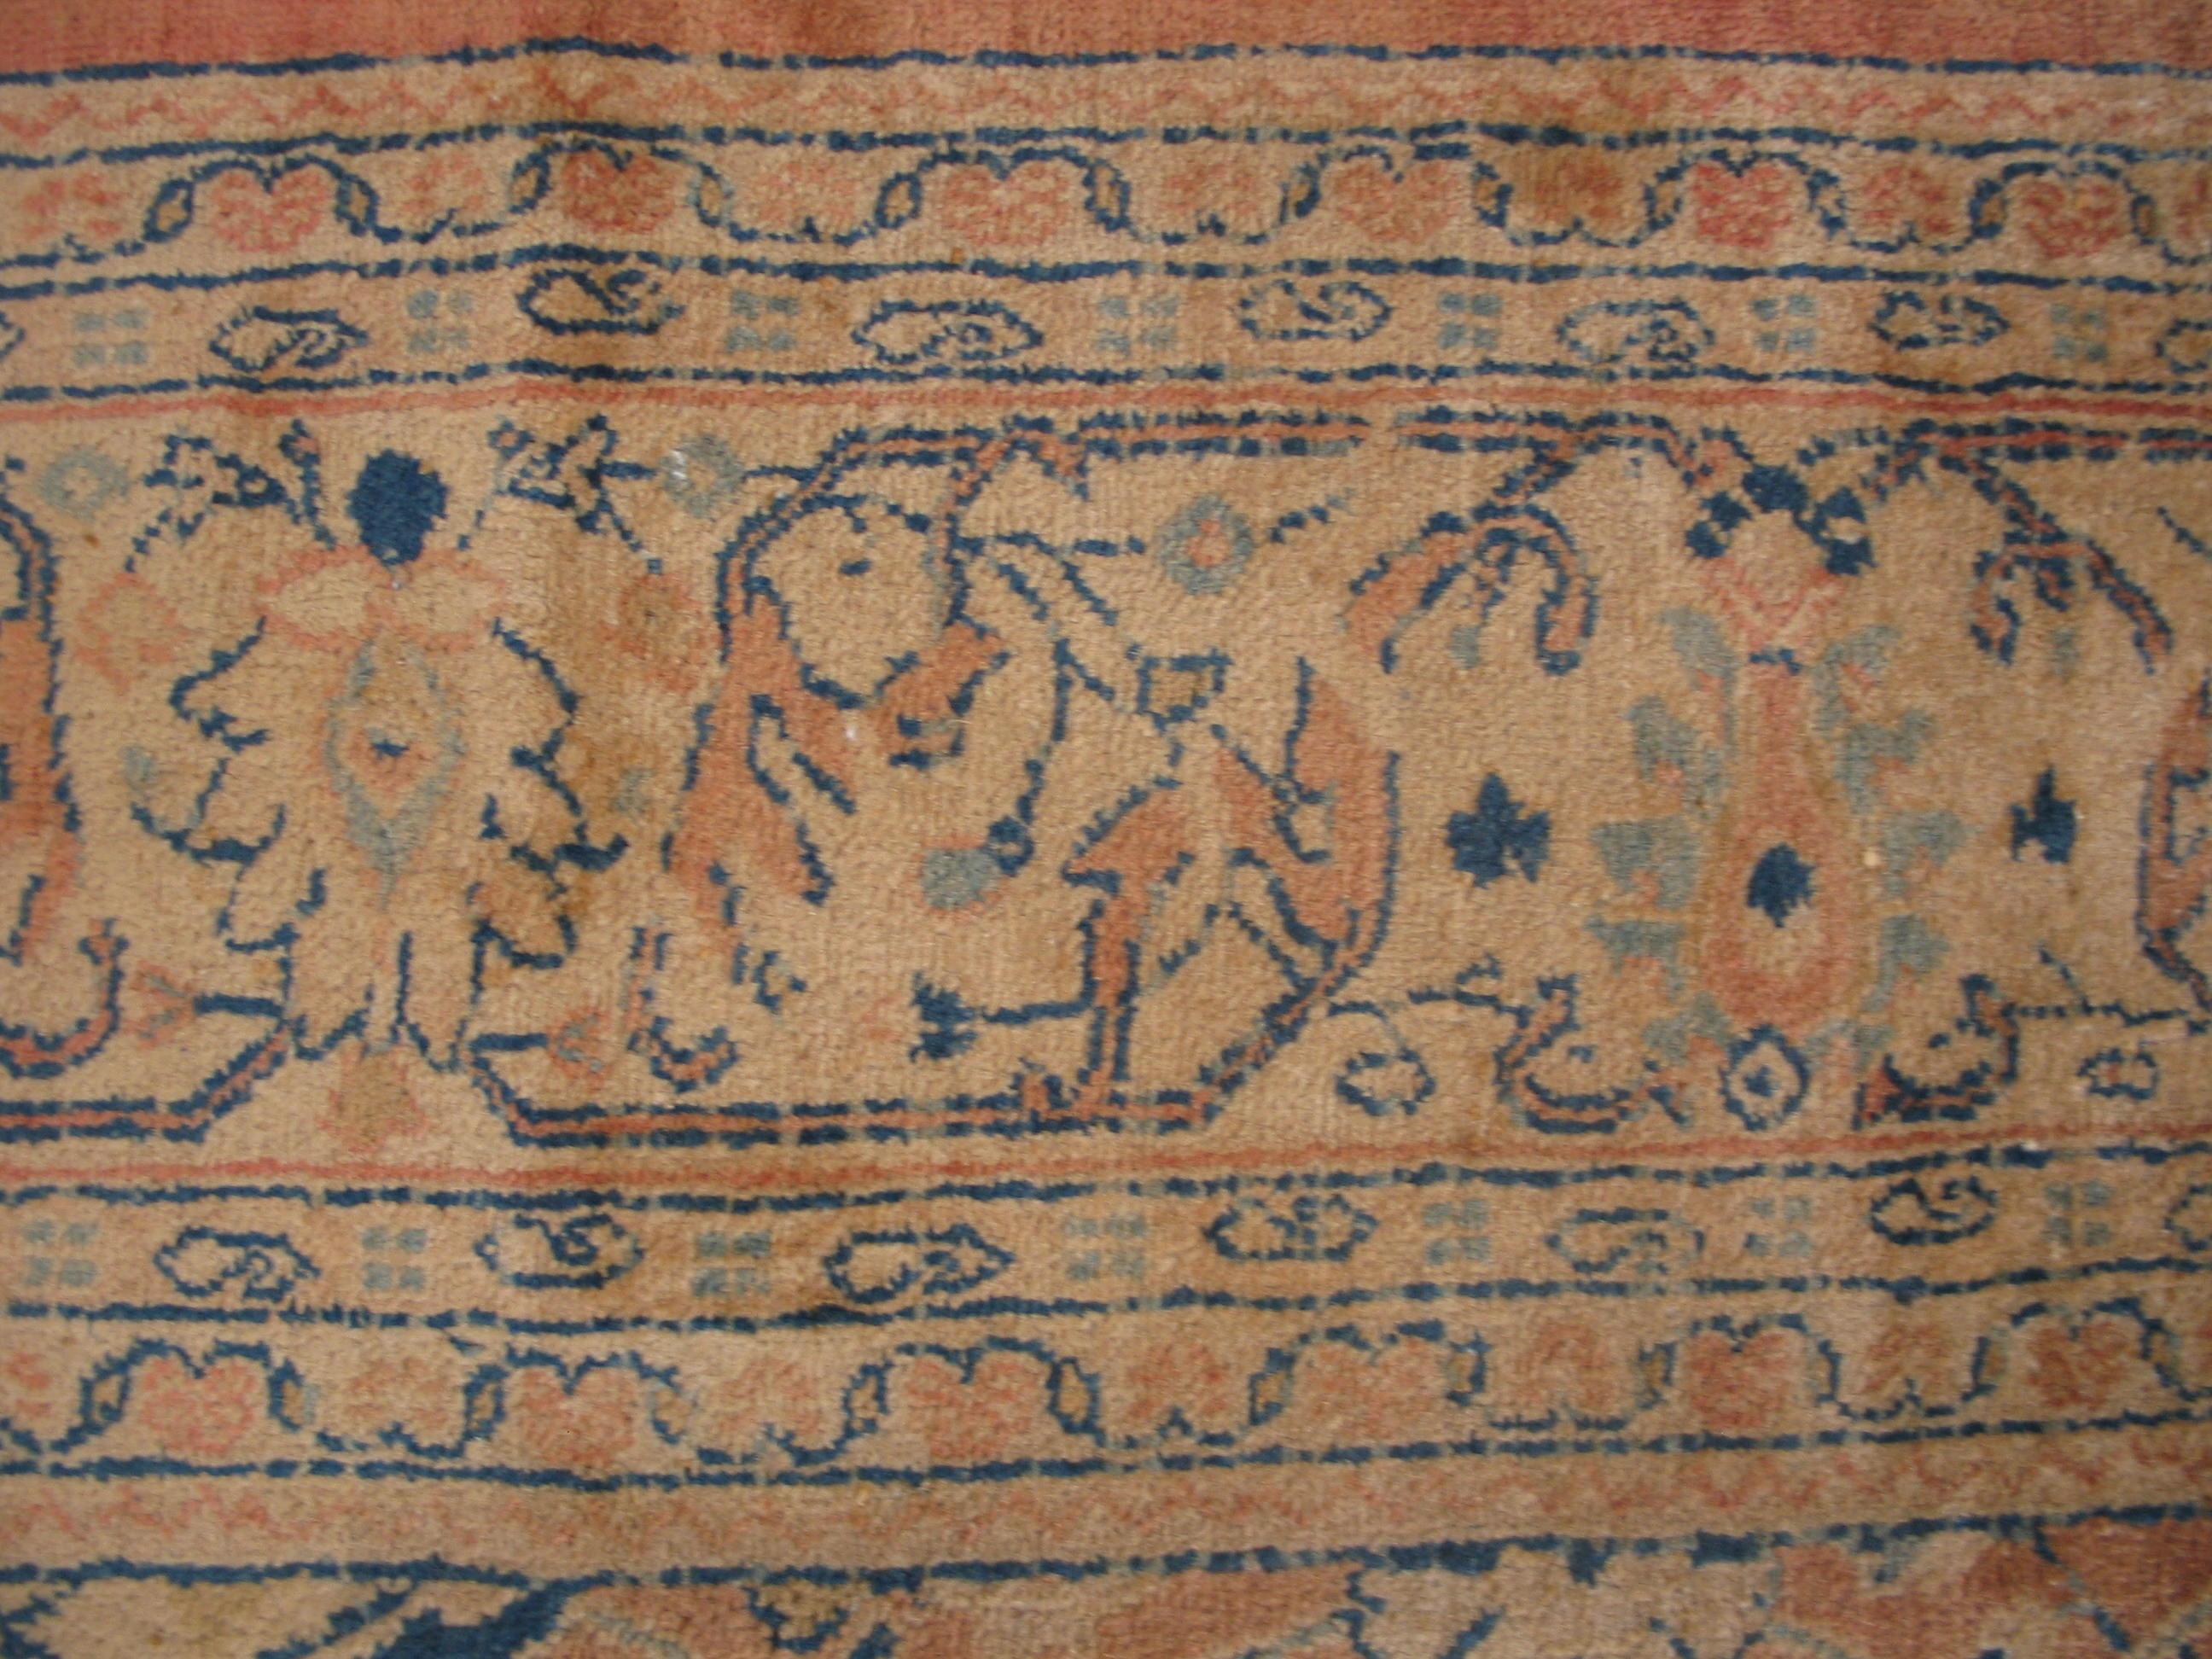 Antique Persian antique Tabriz rug. Measures: 9'3